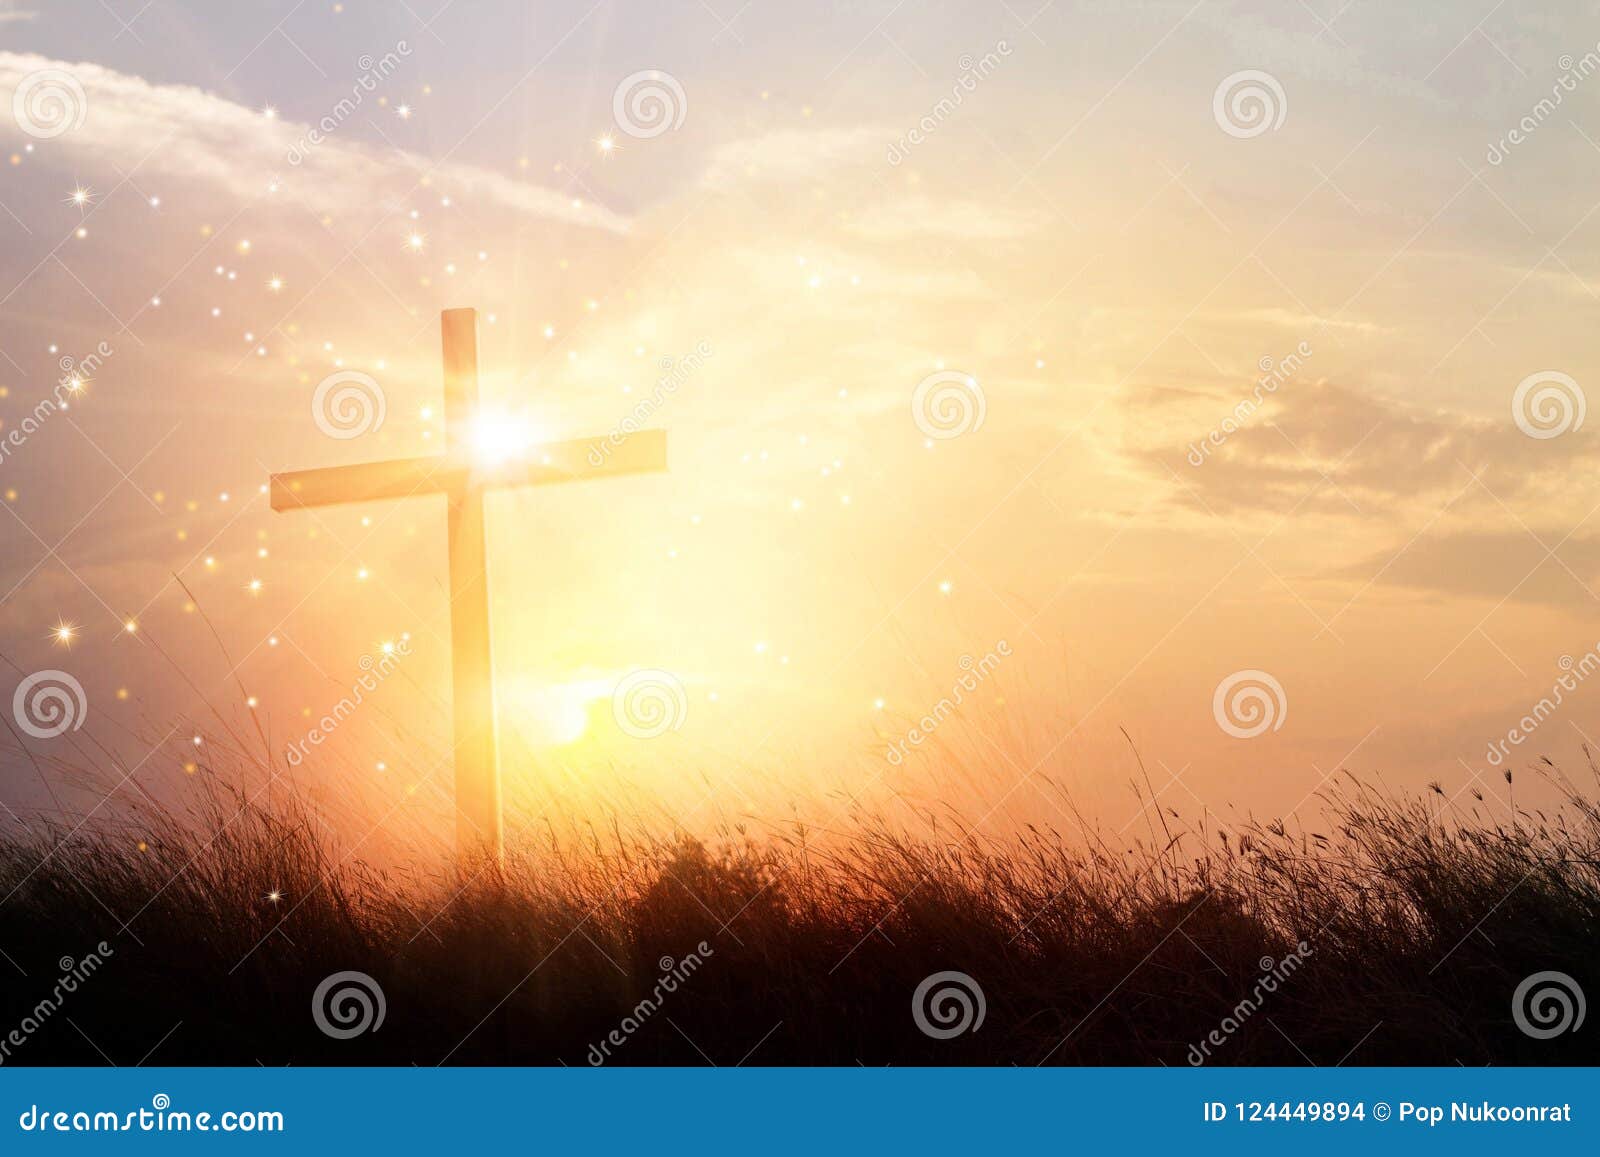 silhouette christian cross on grass in sunrise background m